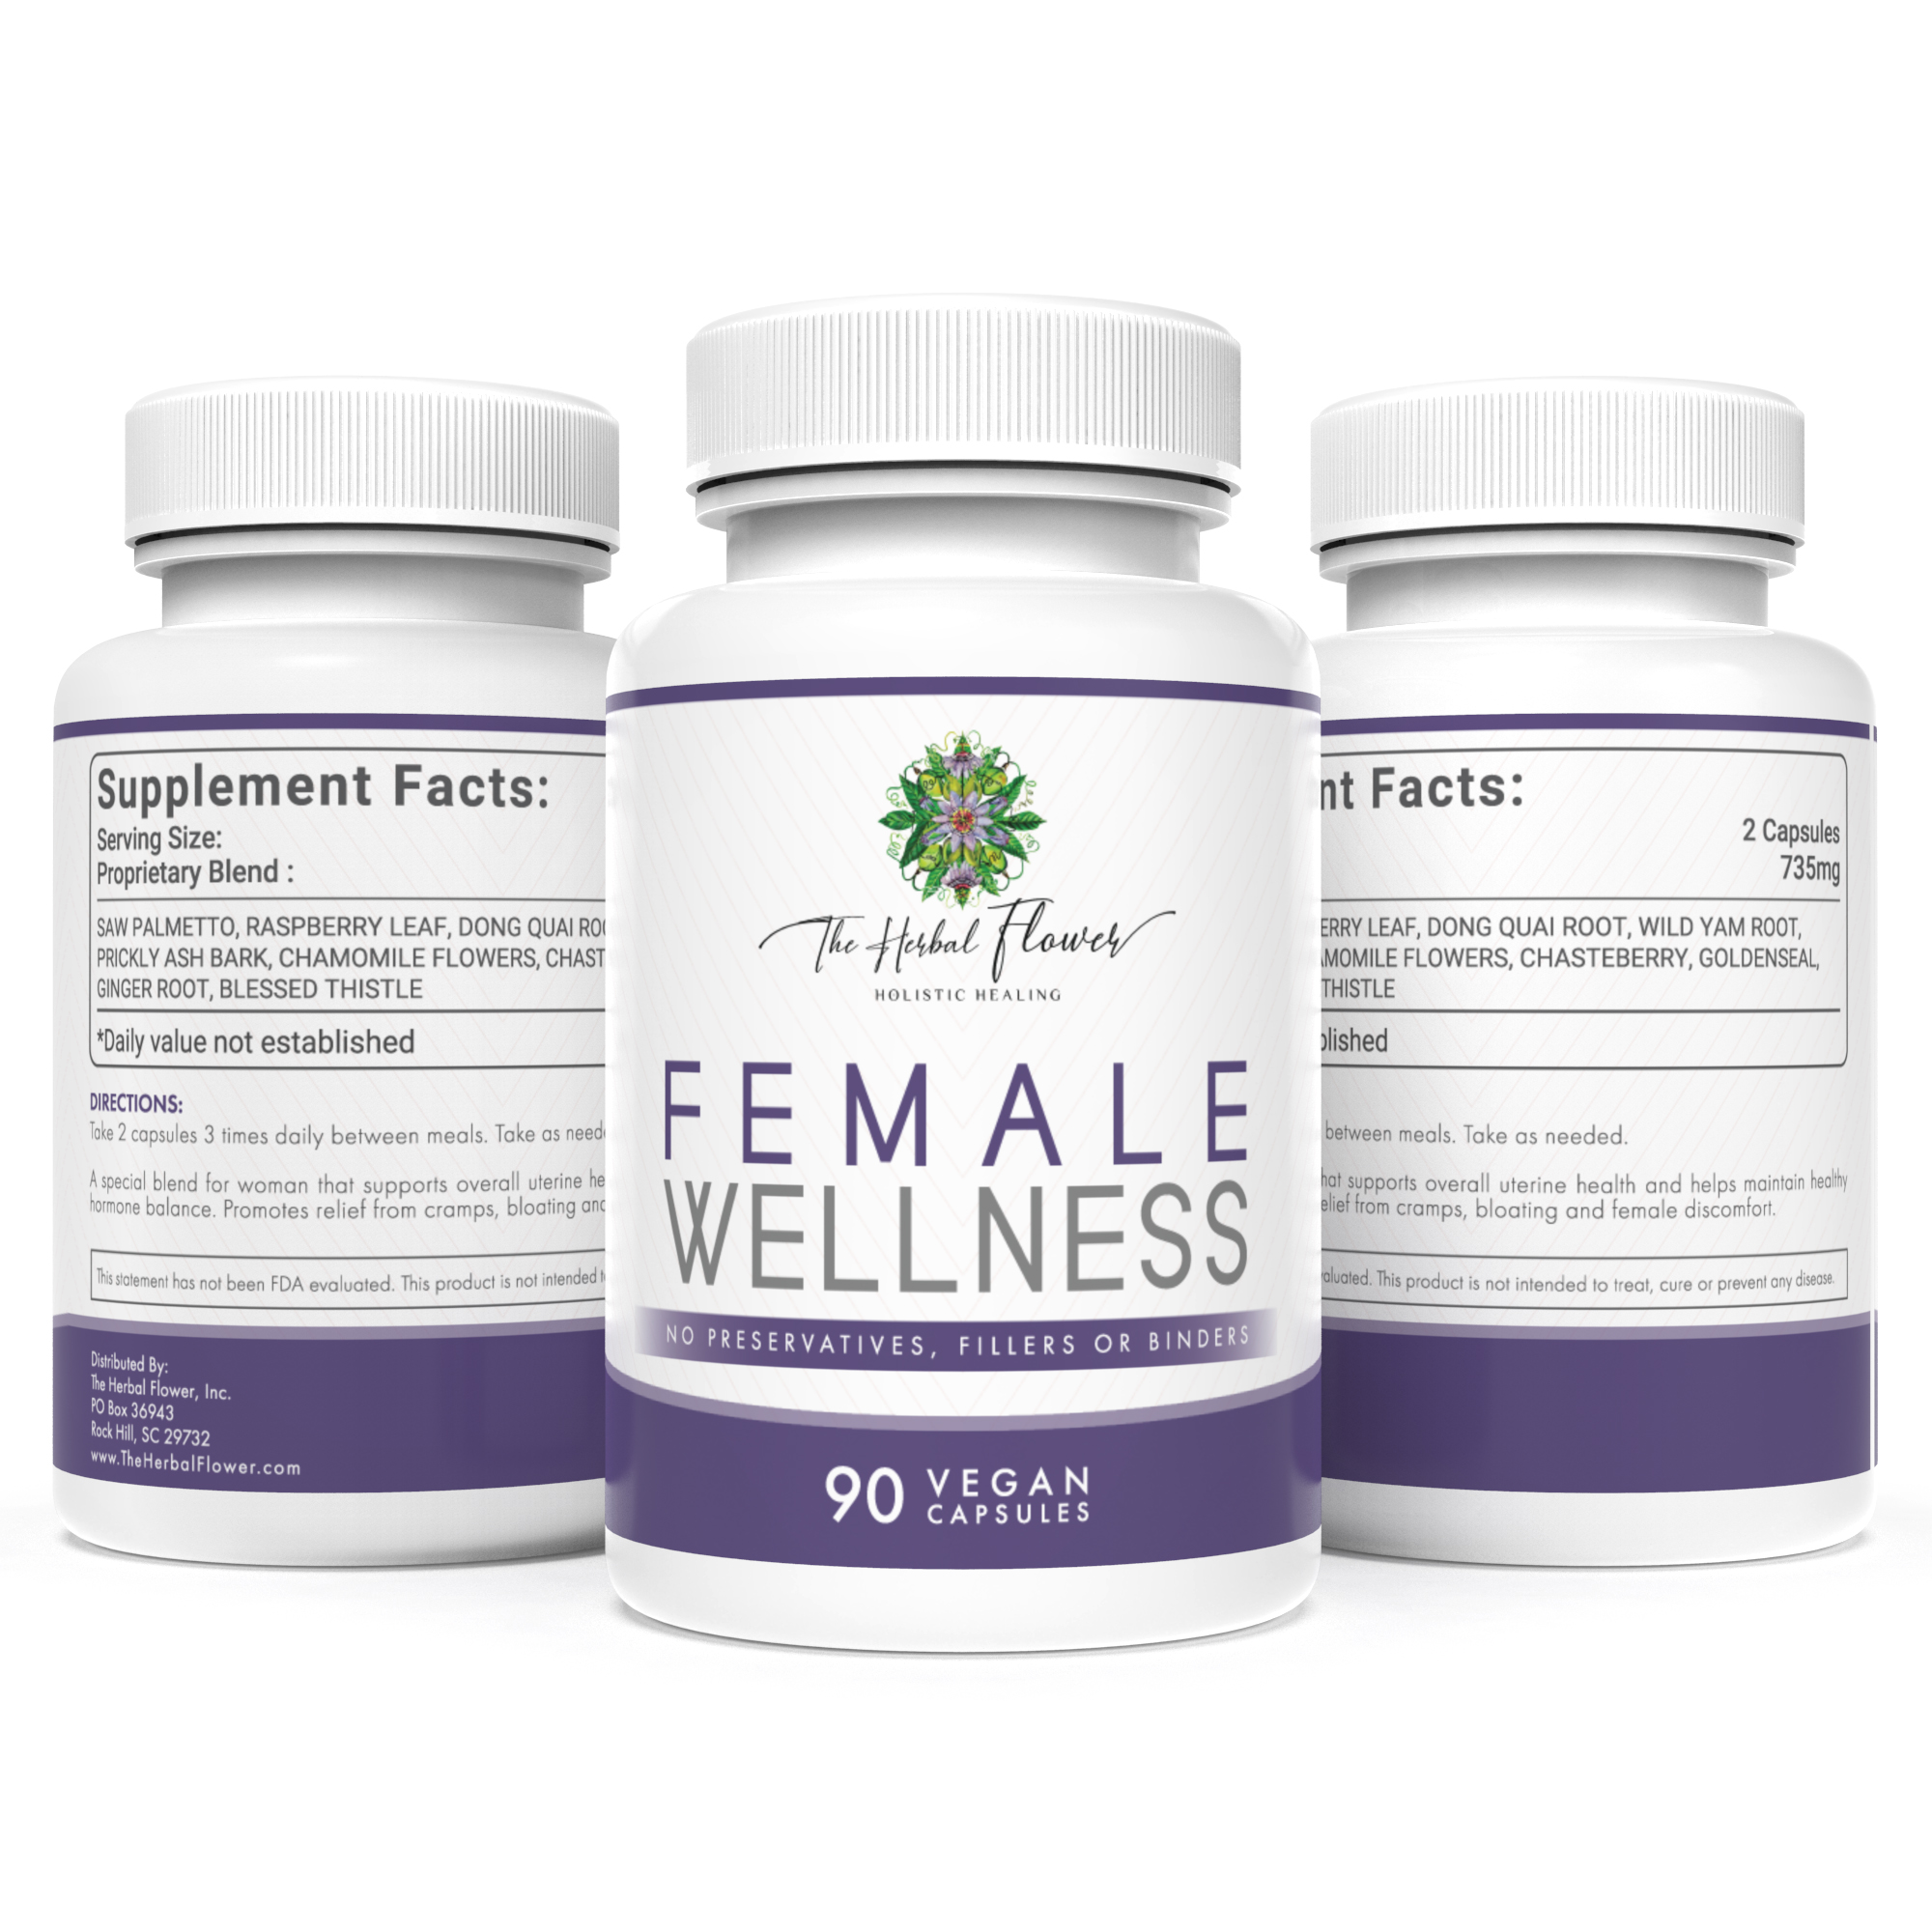 Female Wellness – The Herbal Flower Inc